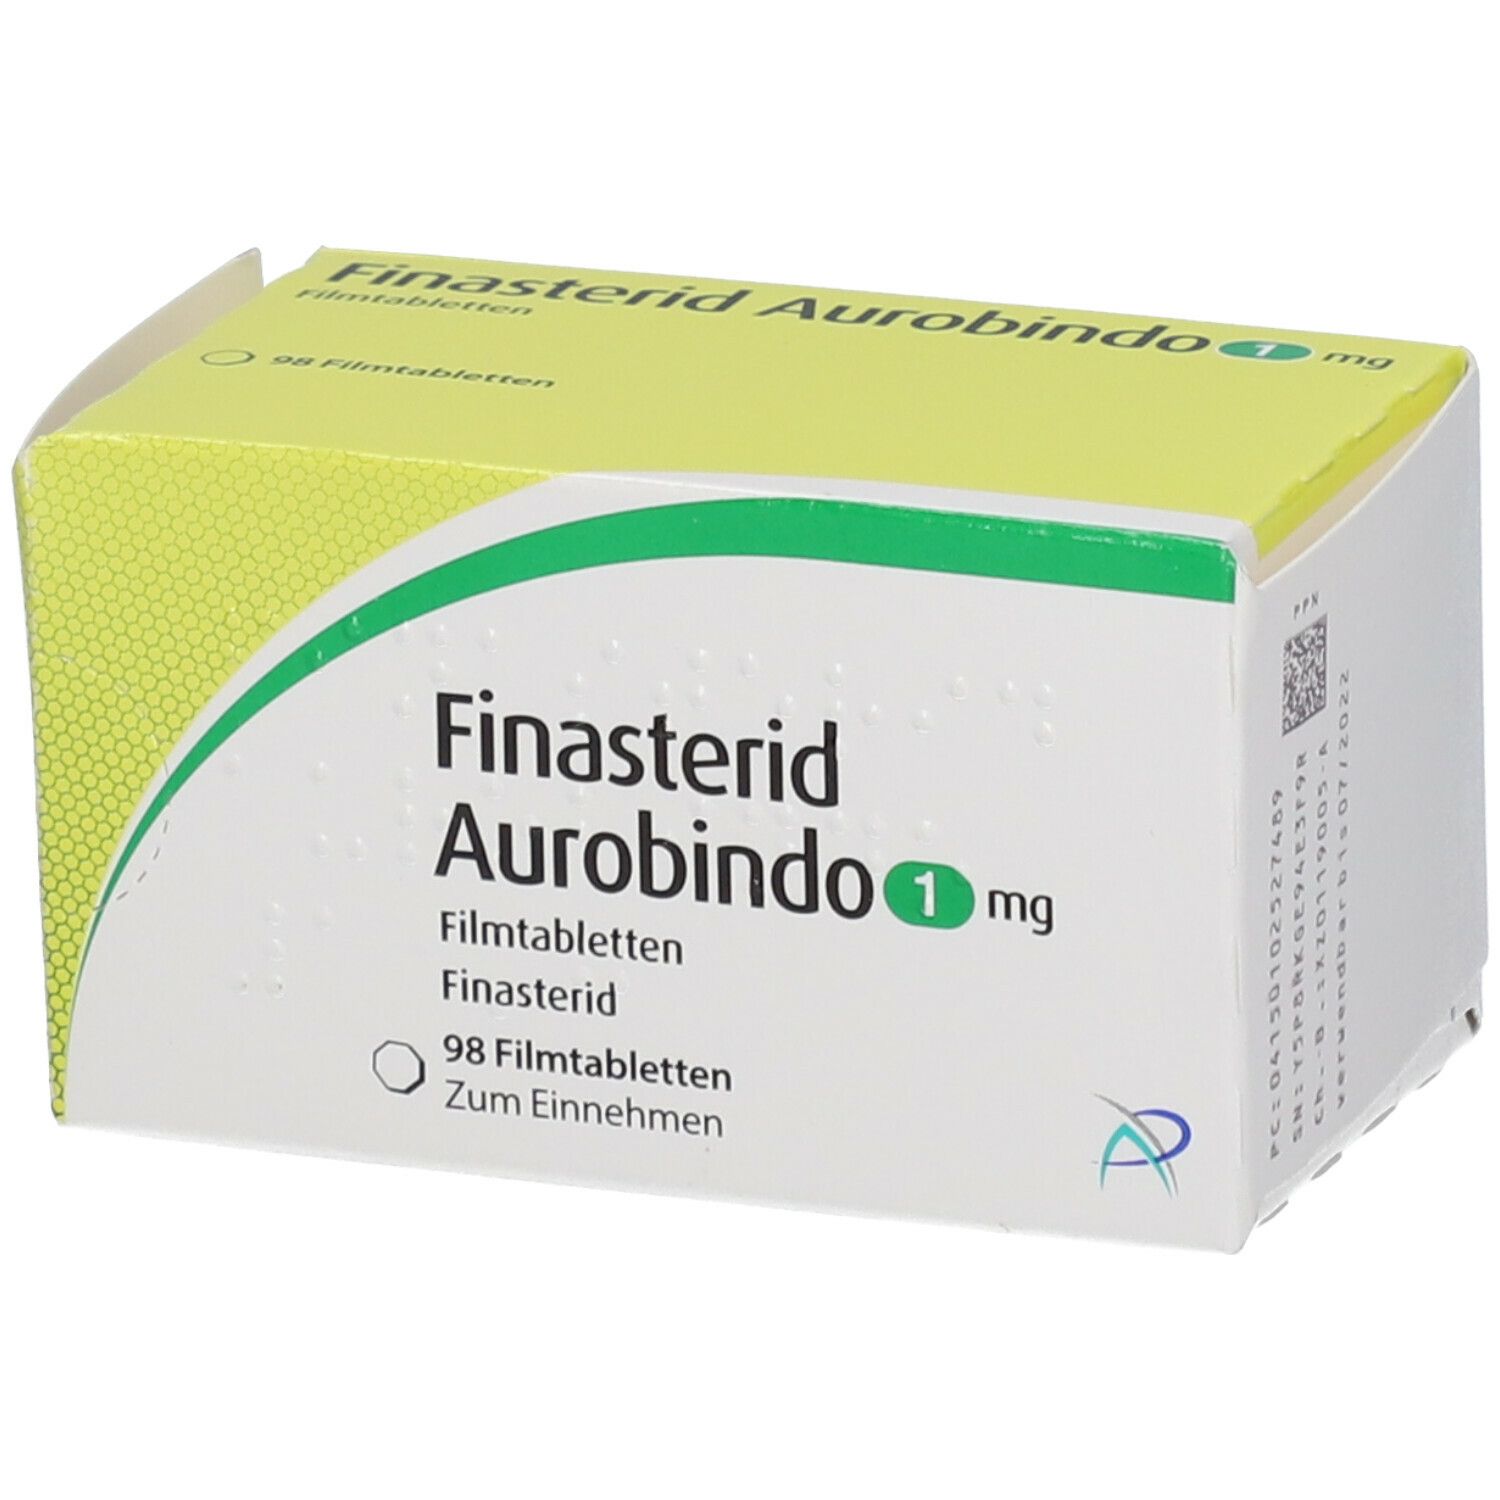 Finasterid Aurobindo 1 mg